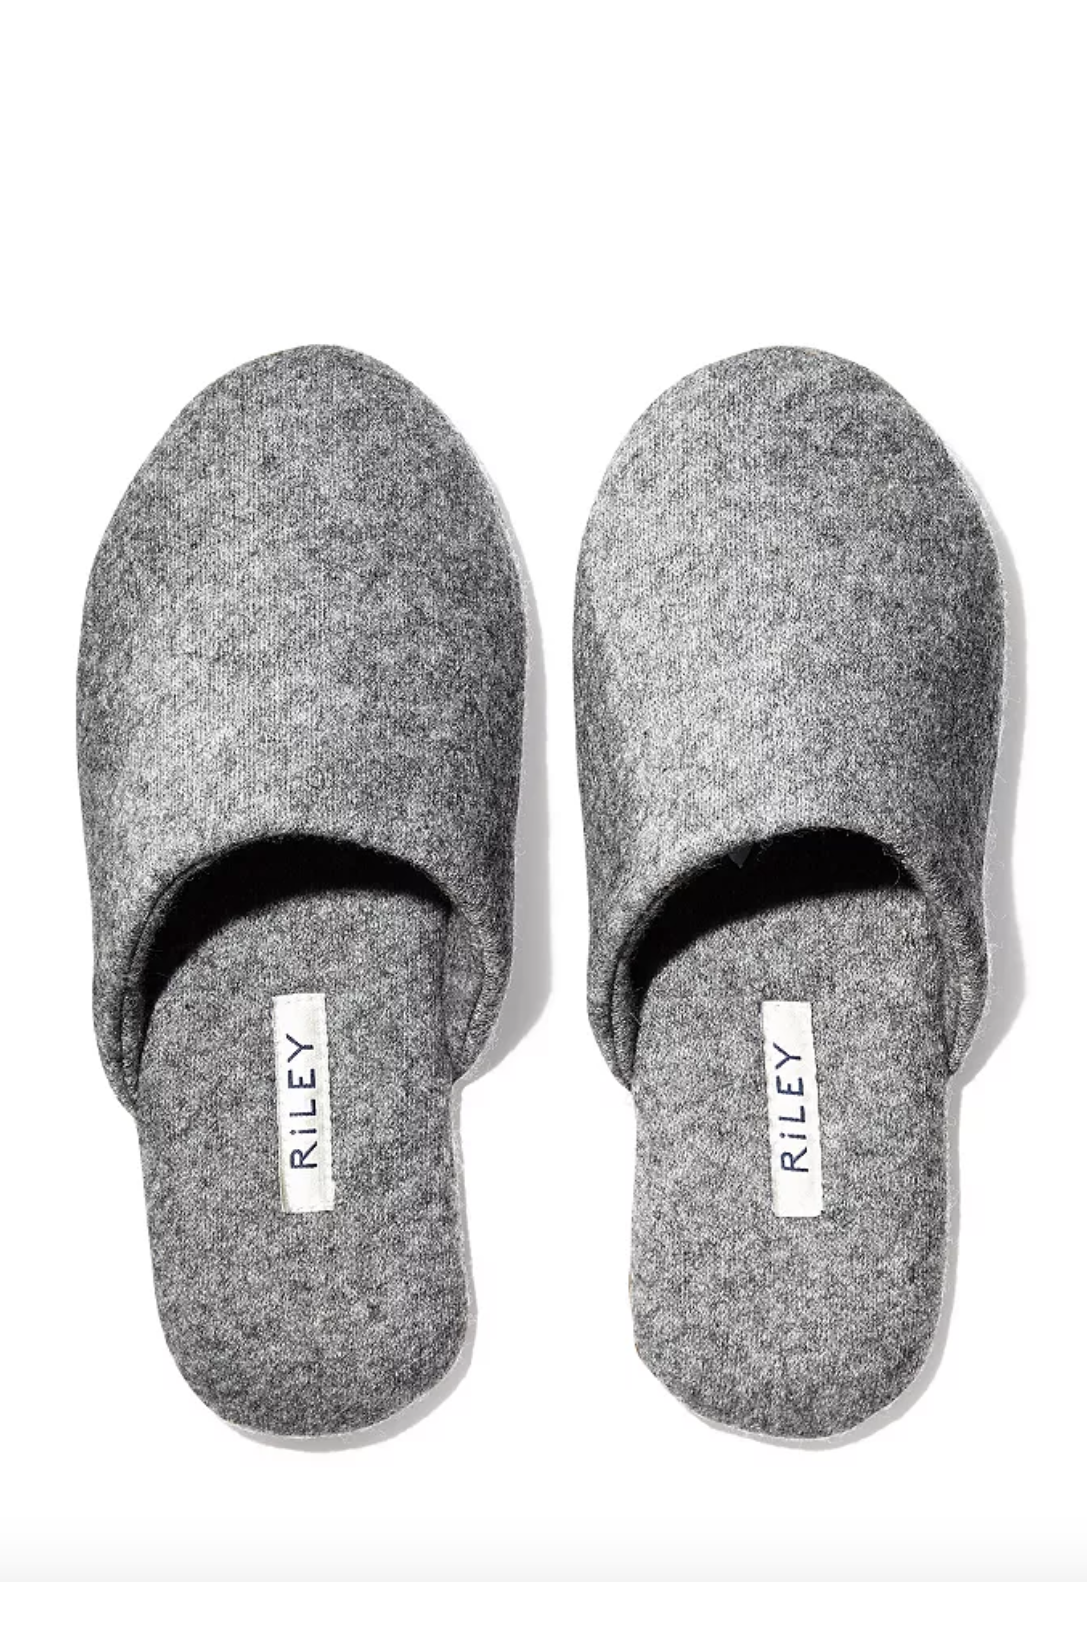 most stylish slippers